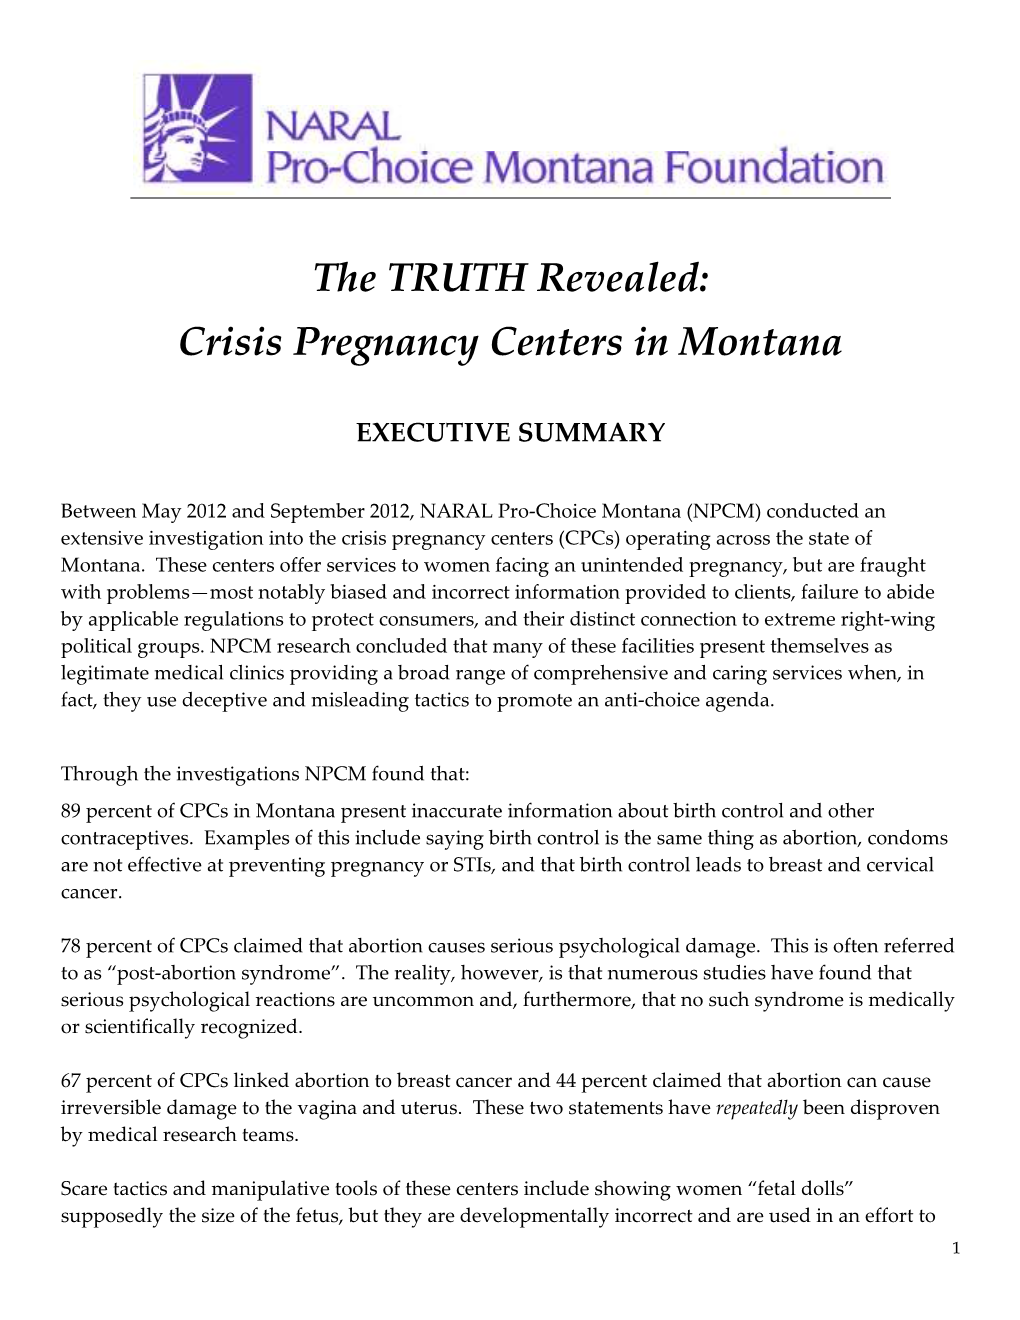 Crisis Pregnancy Centers in Montana